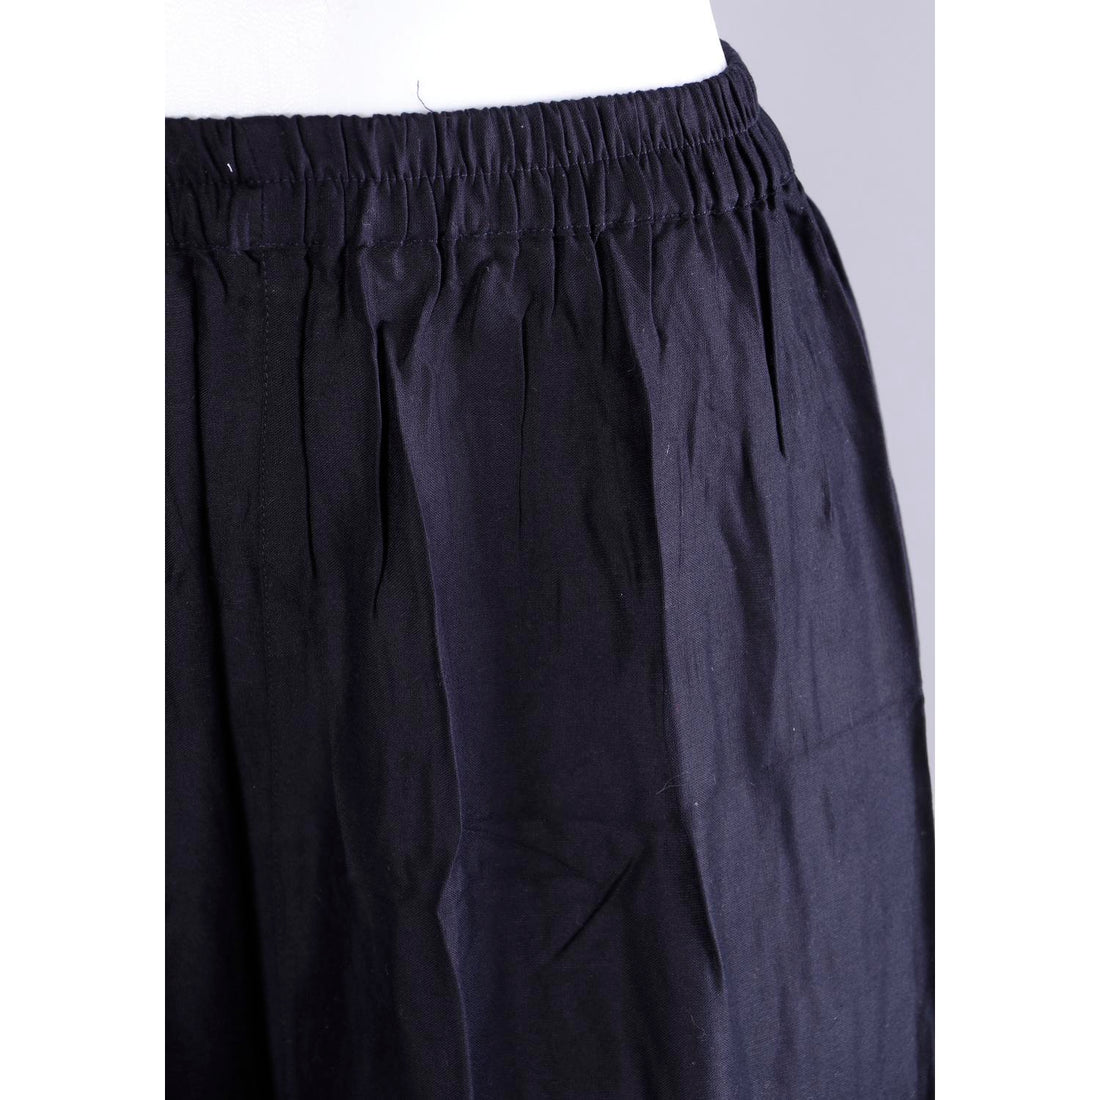 Black Colour Sharara Pants